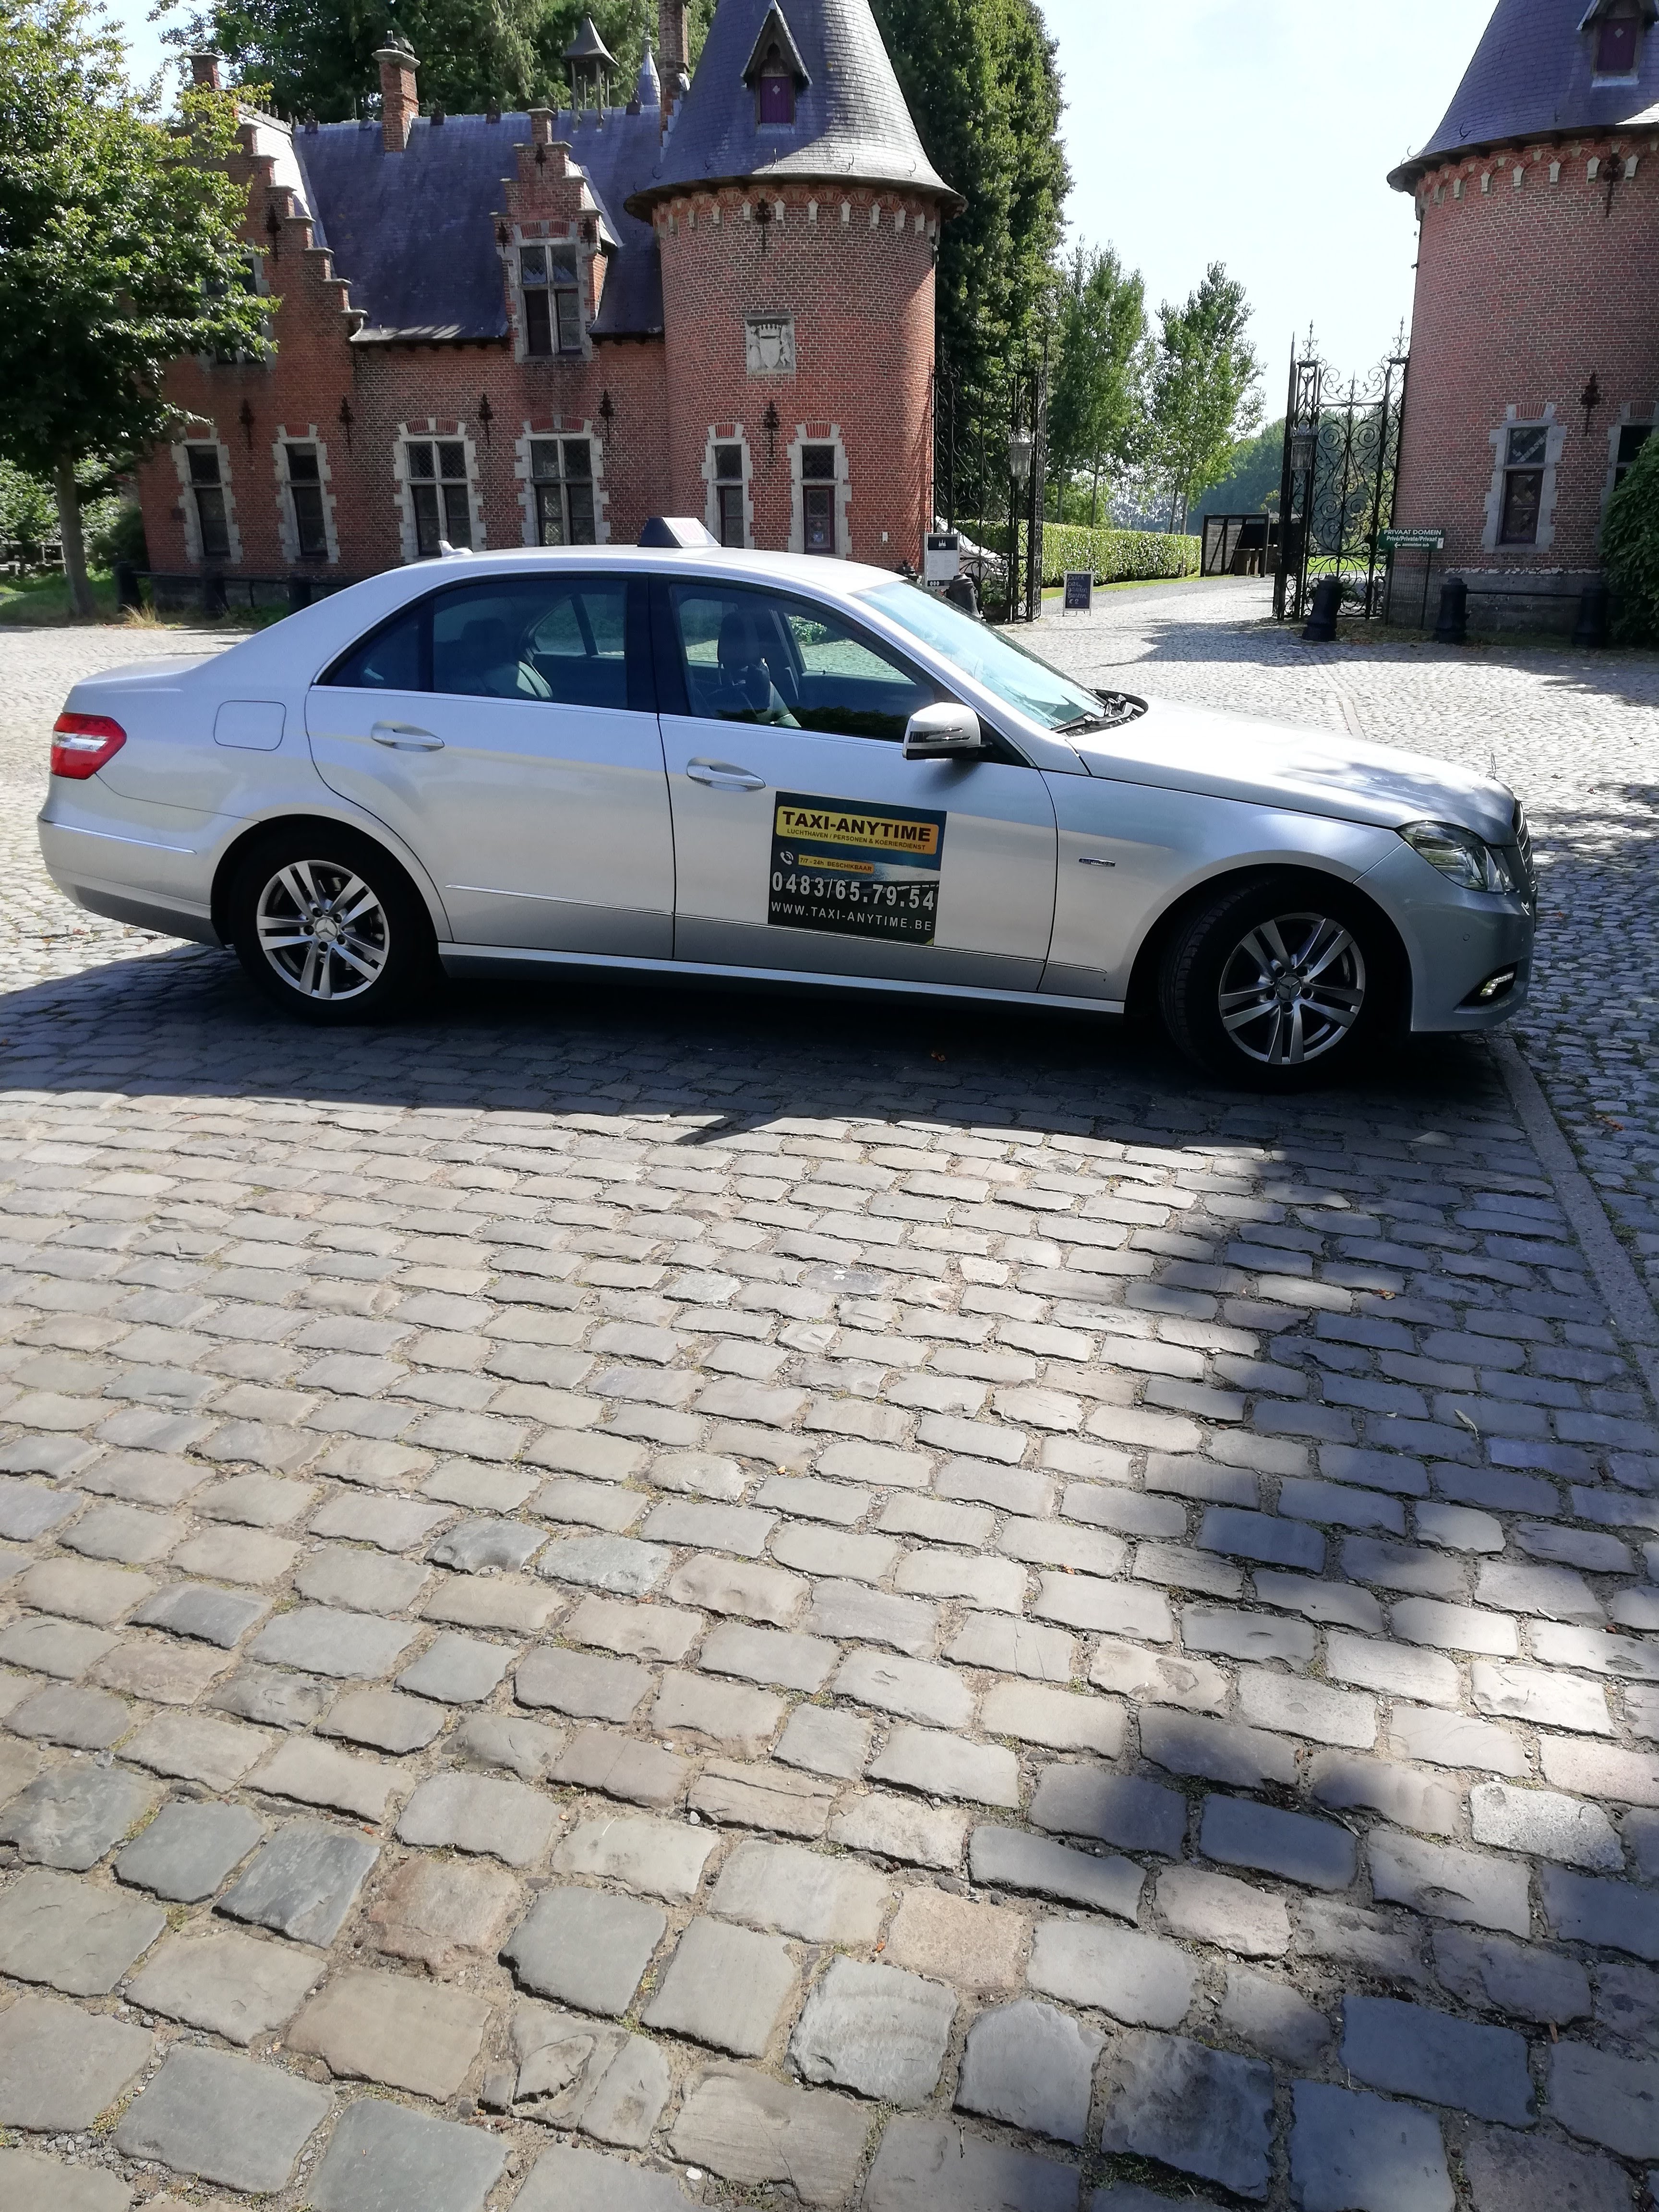 transportbedrijven Antwerpen anytime taxi